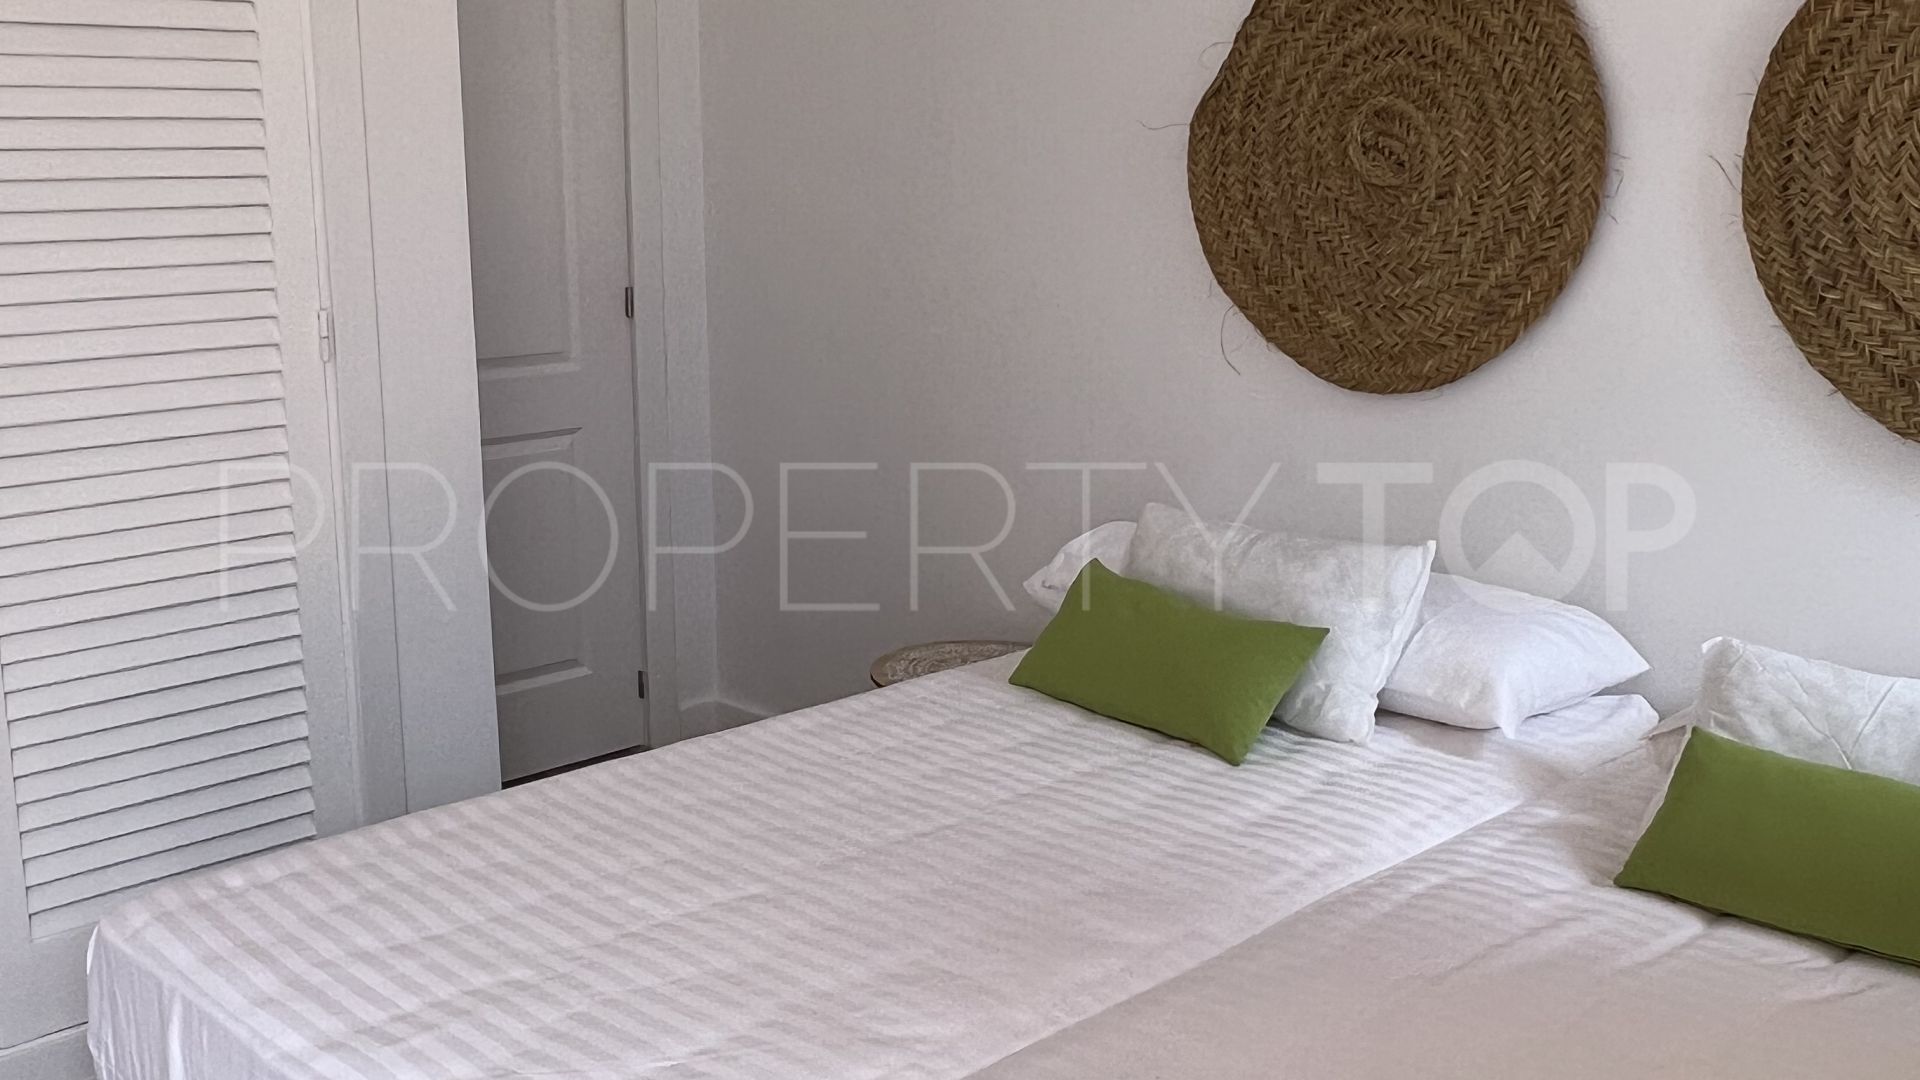 2 bedrooms apartment in Cala Tarida for sale